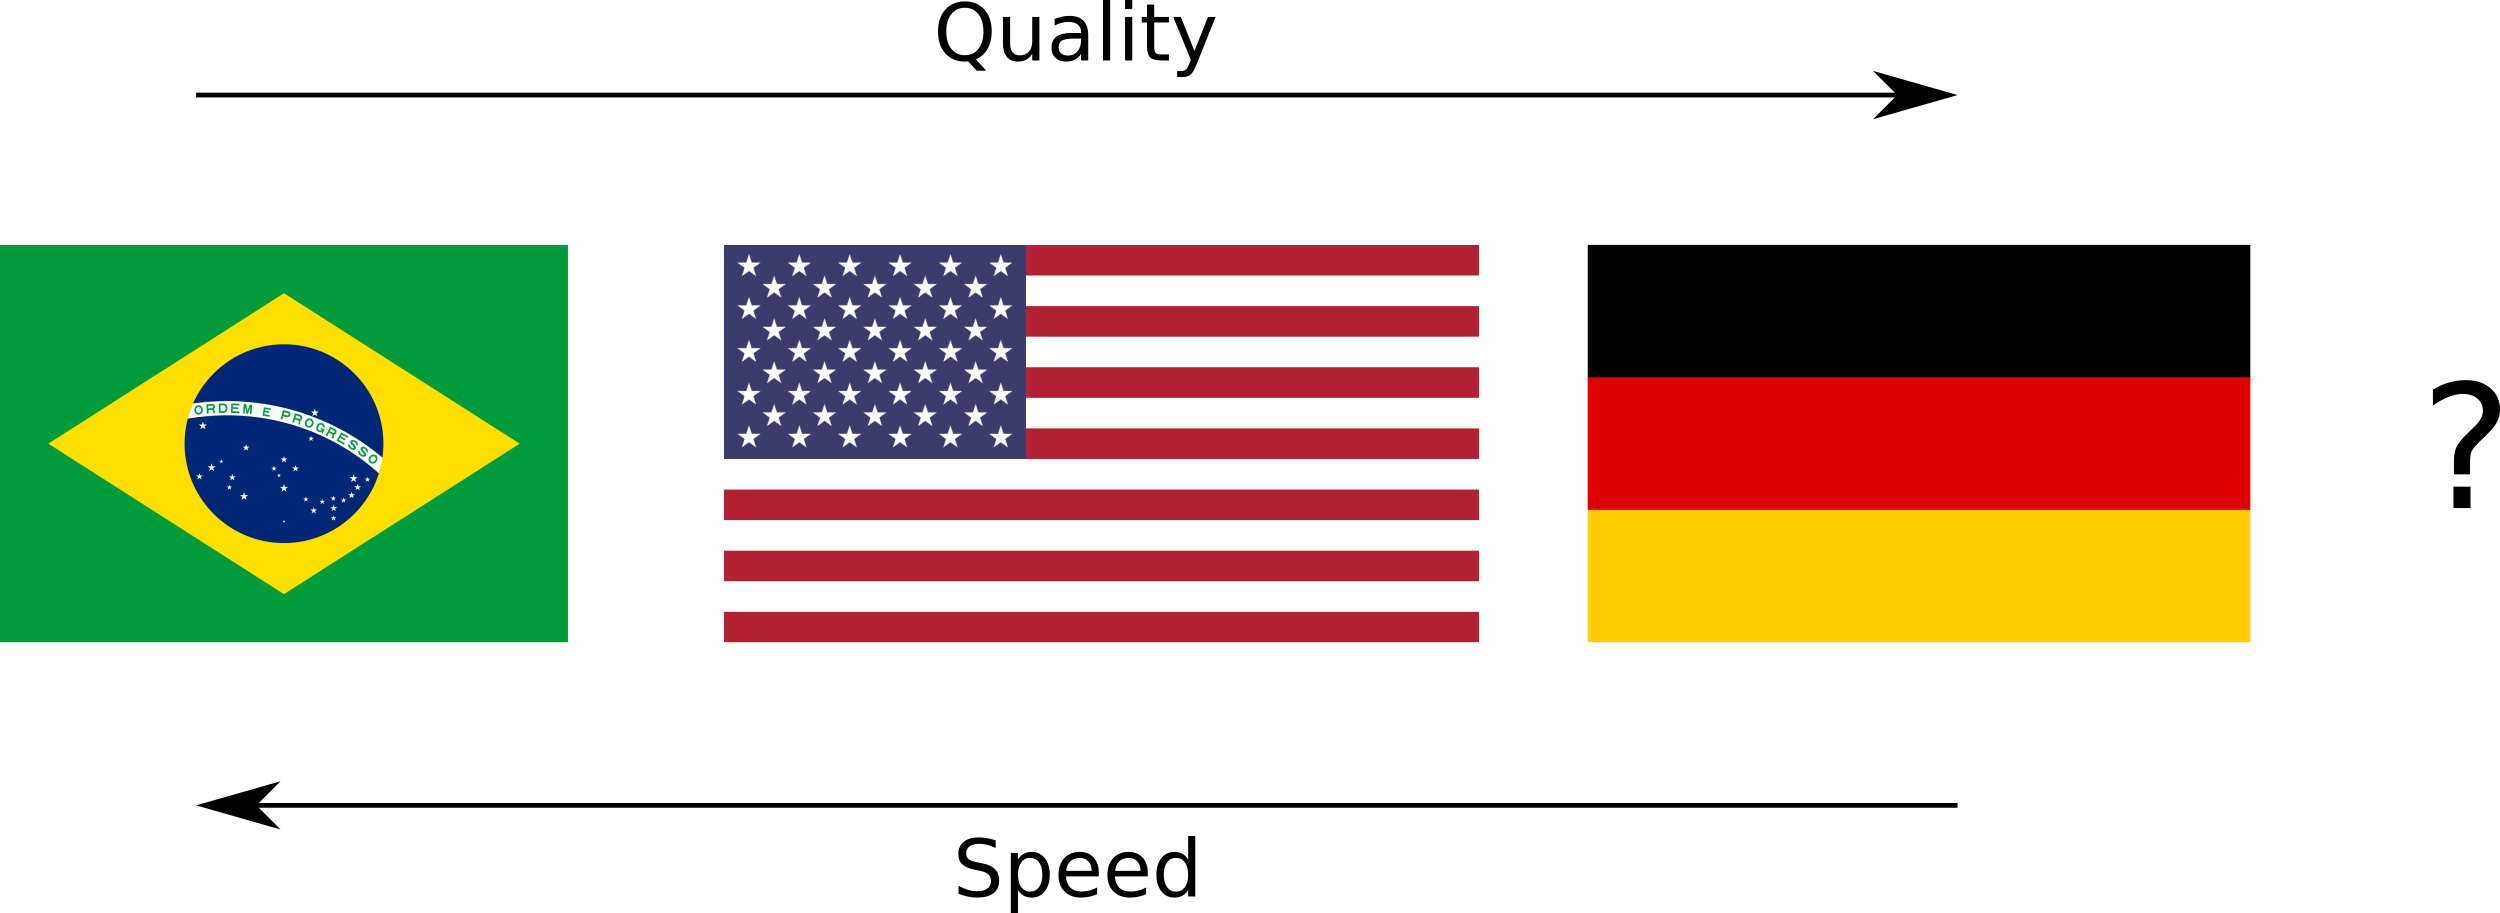 In quality: Germany > USA > Brazil. In speed: Brazil > USA > Germany